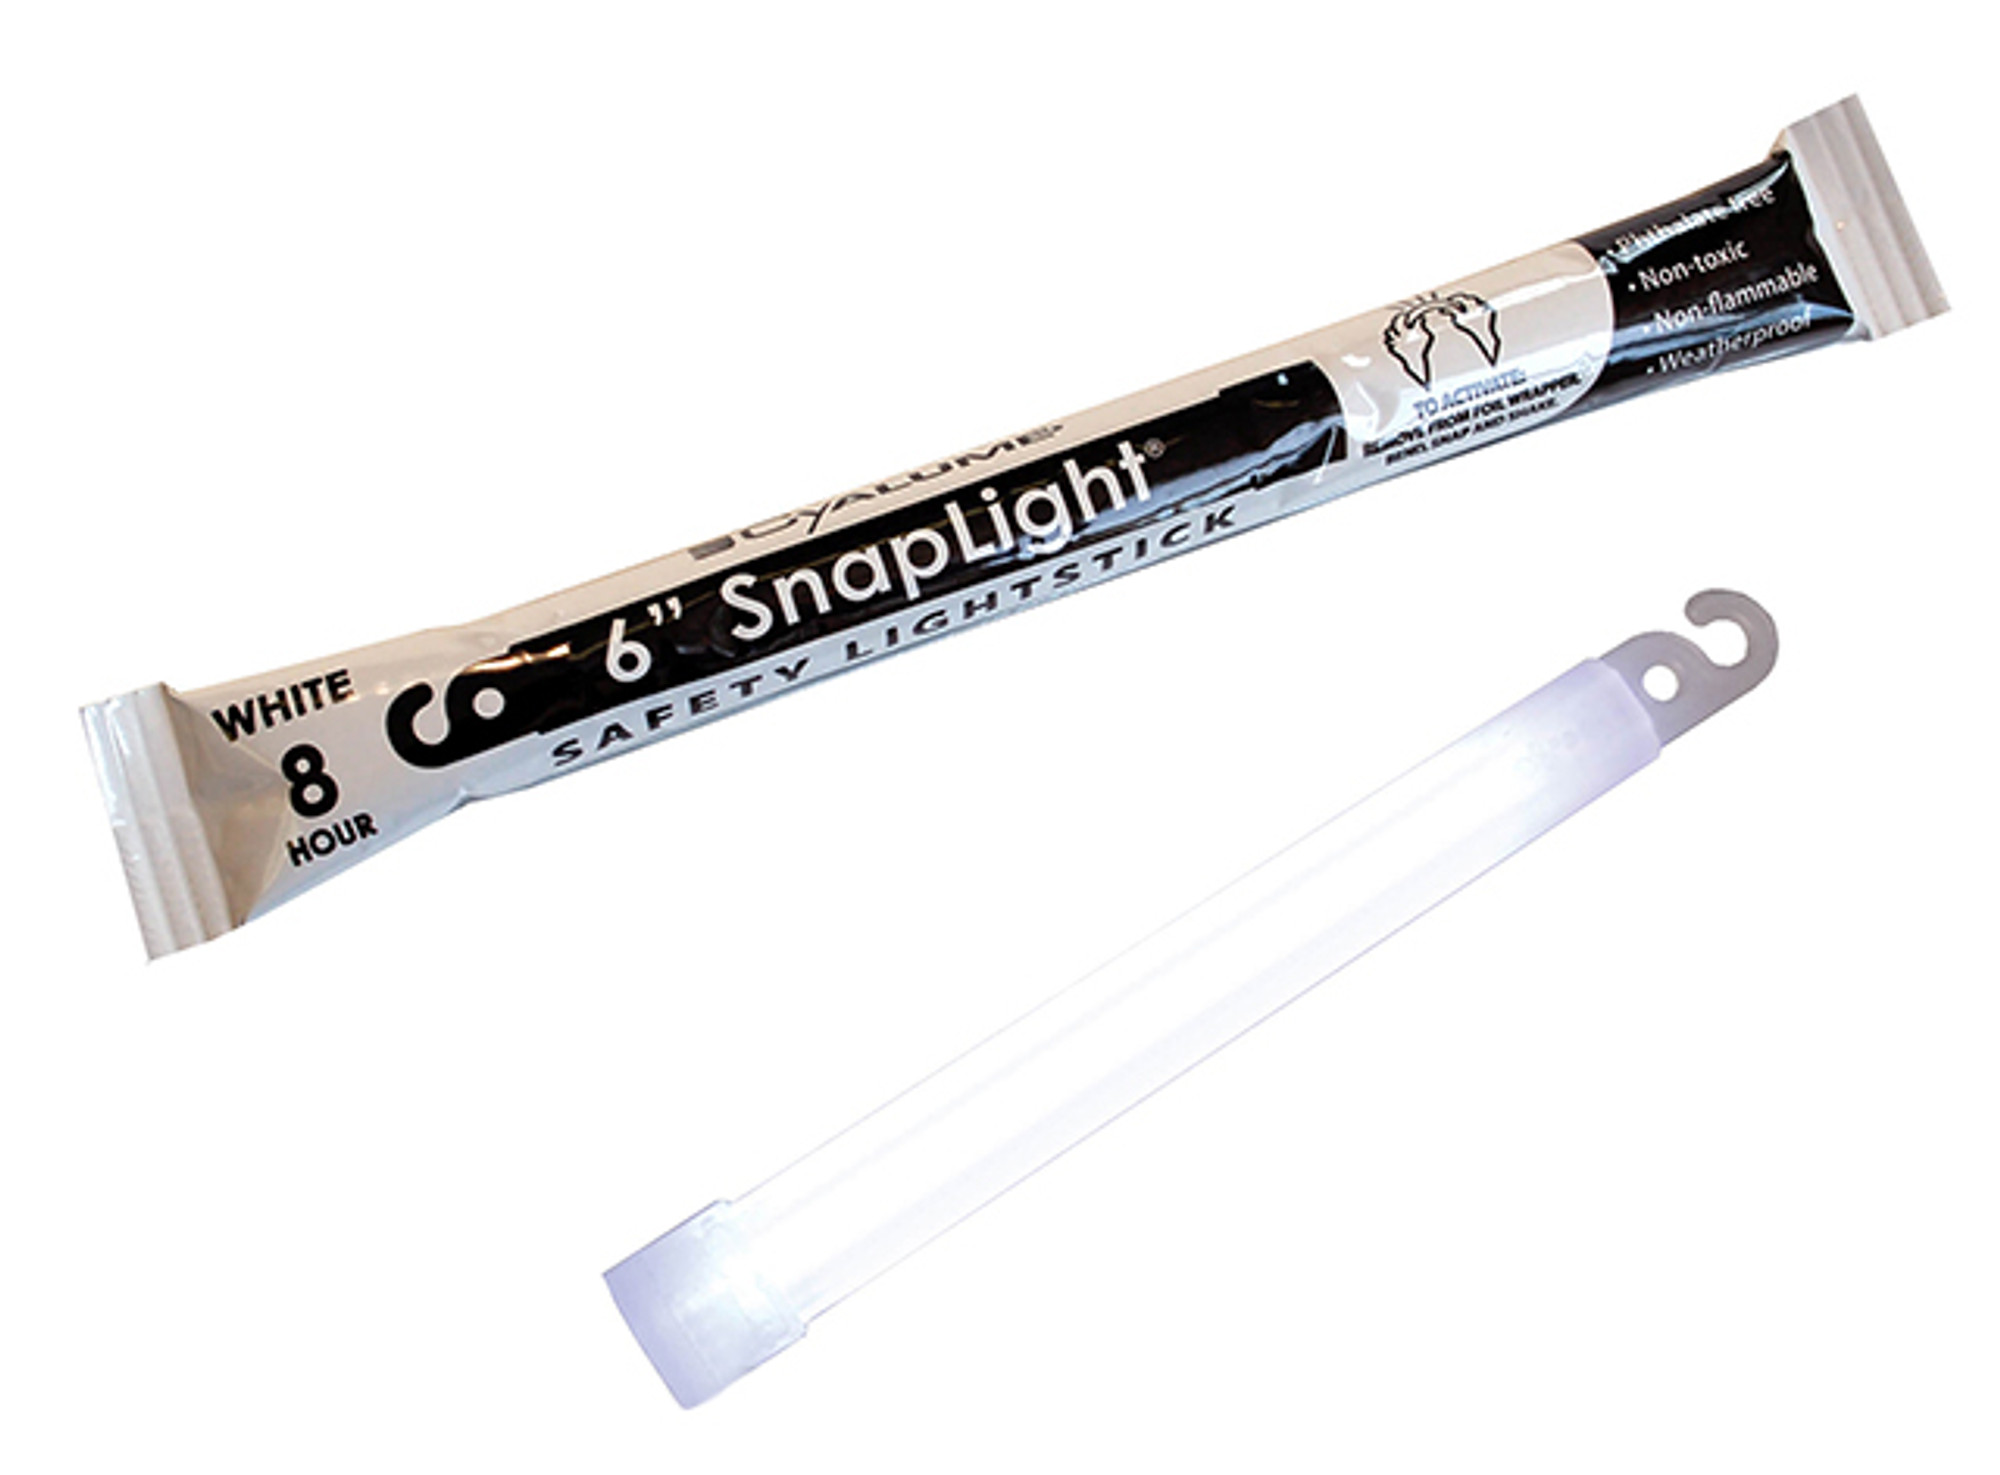 Cyalume 6" SnapLight LightStick - White